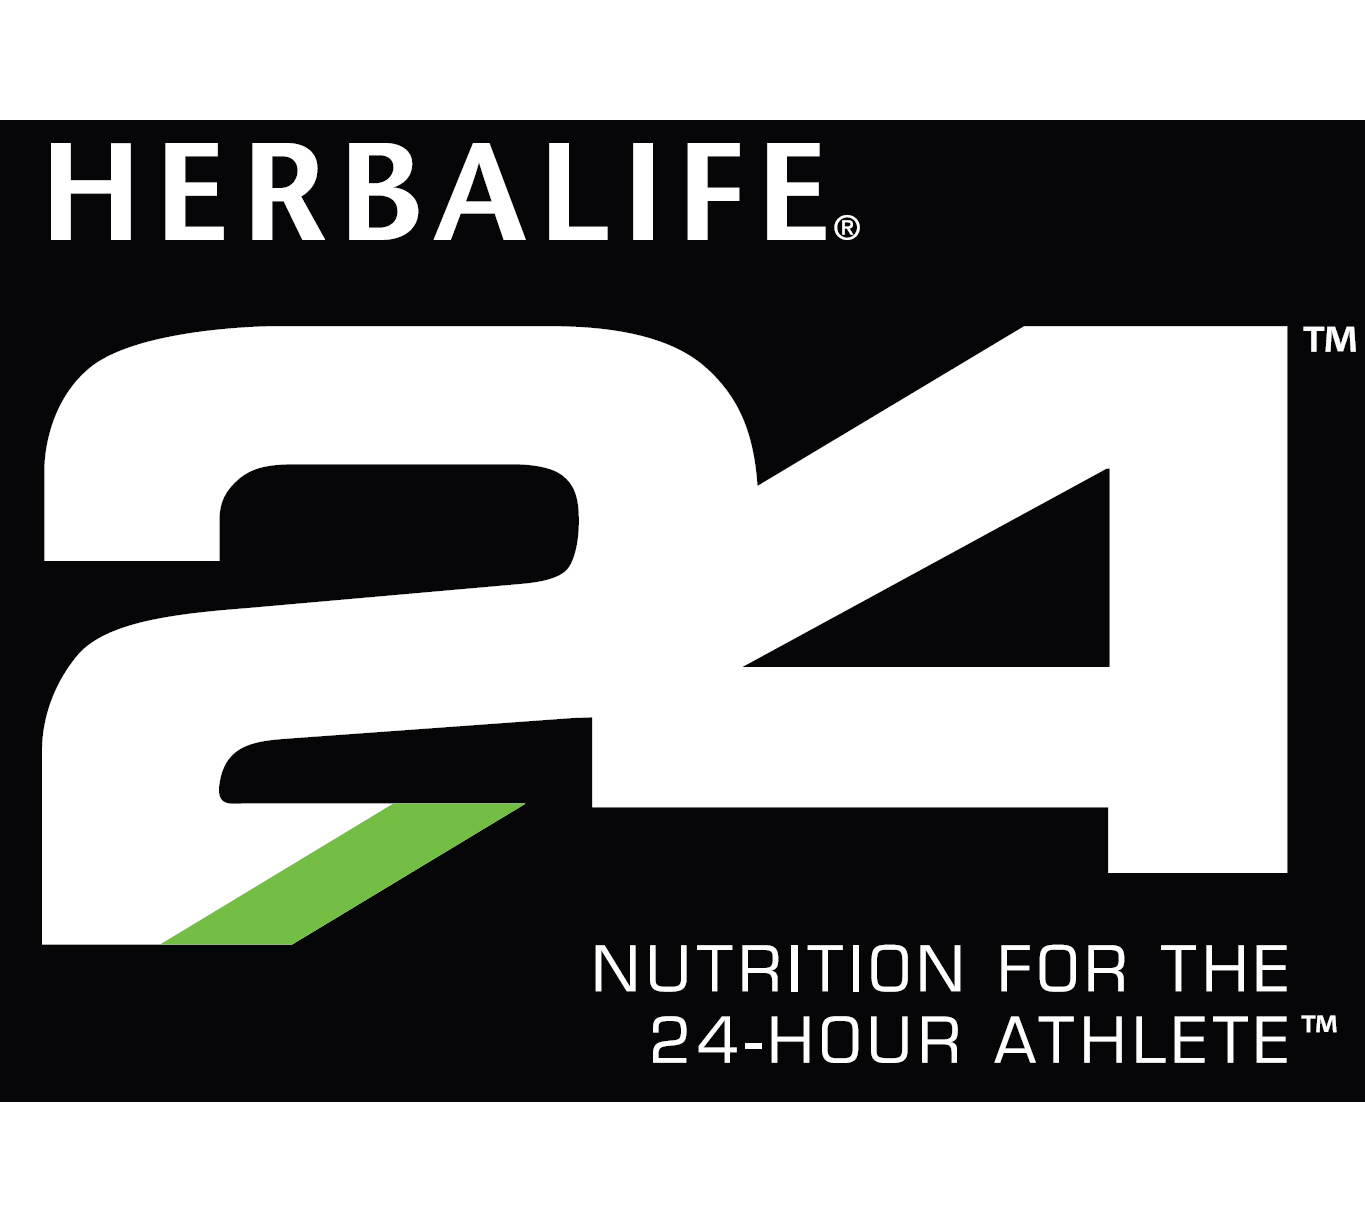 Herbalife 24 Logo Related Keywords, Herbalife 24 Logo. keywordhungry.com. 